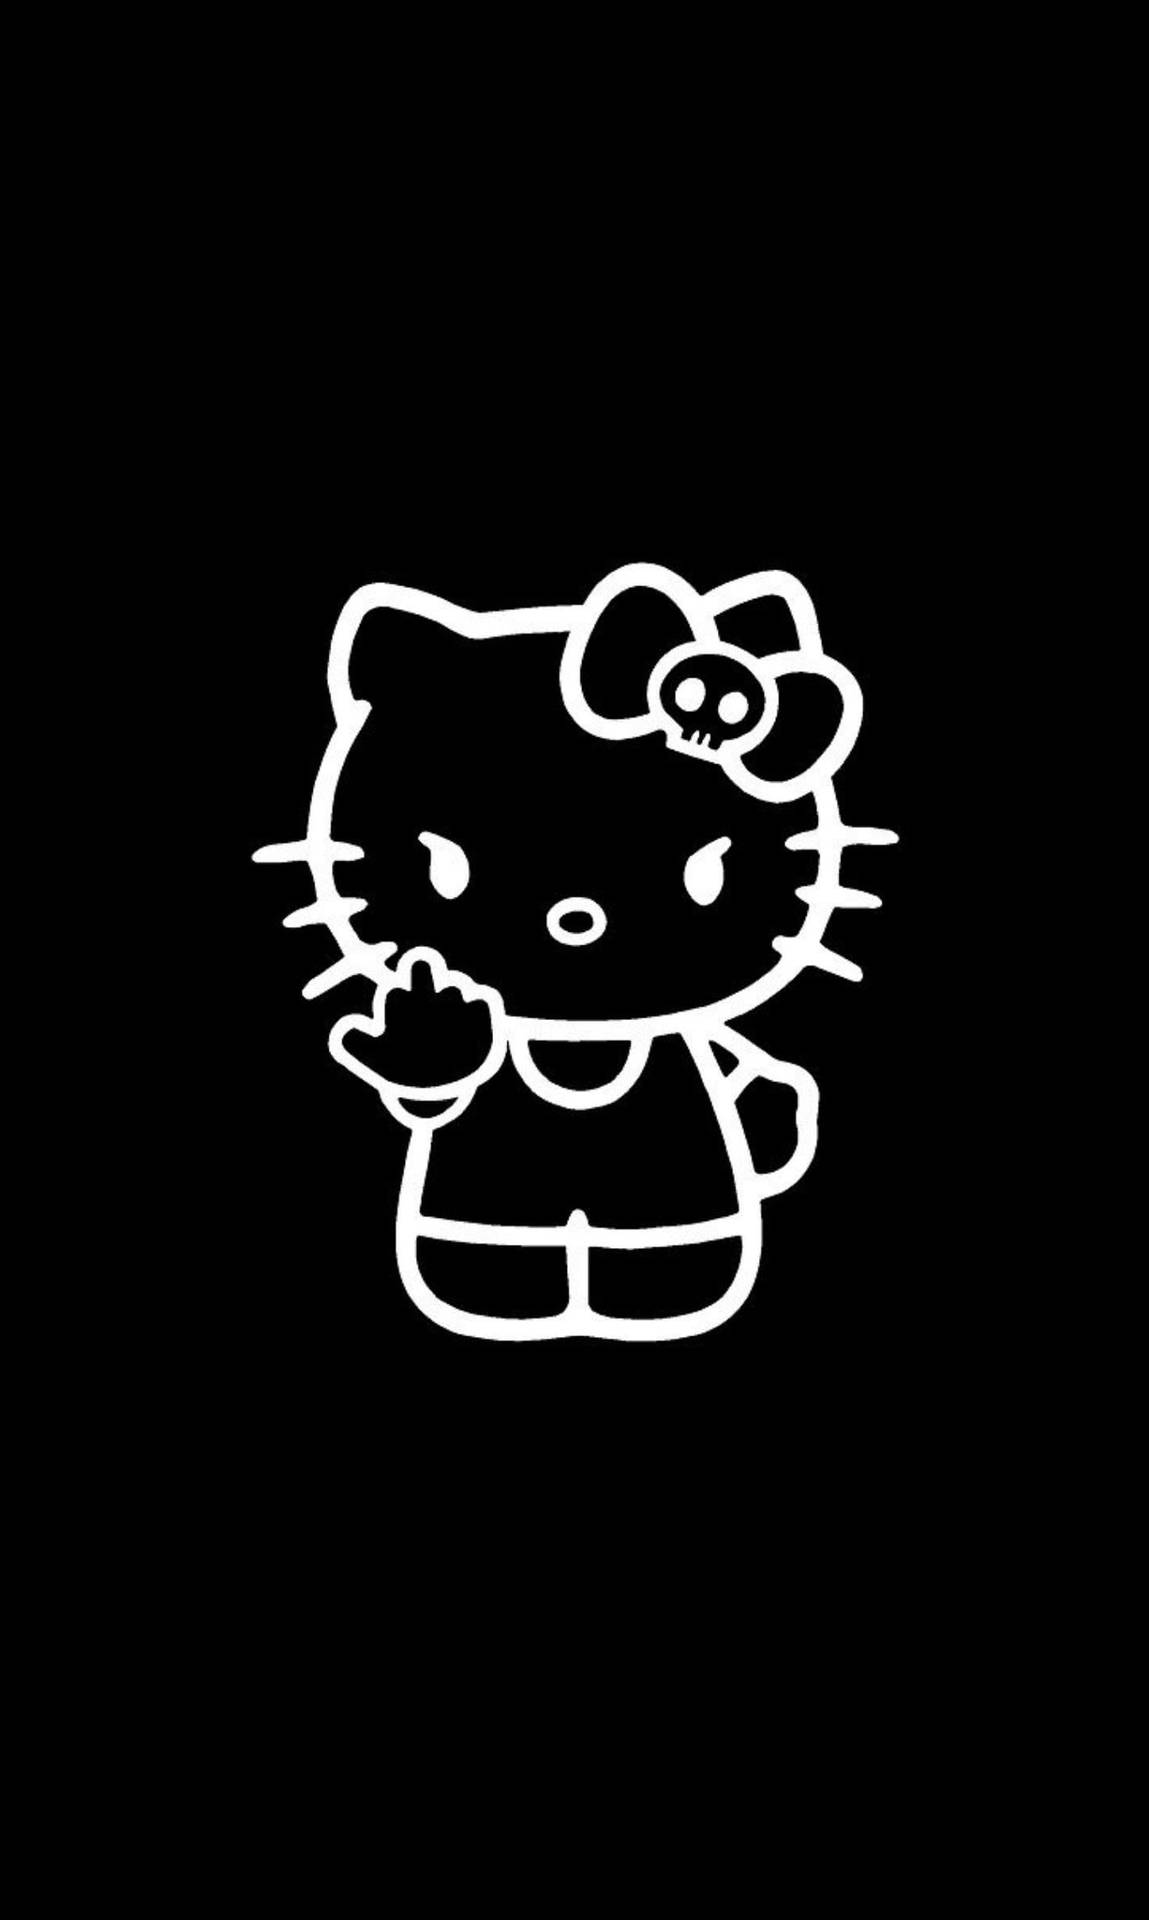 Black Hello Kitty Obscene Gesture Wallpaper